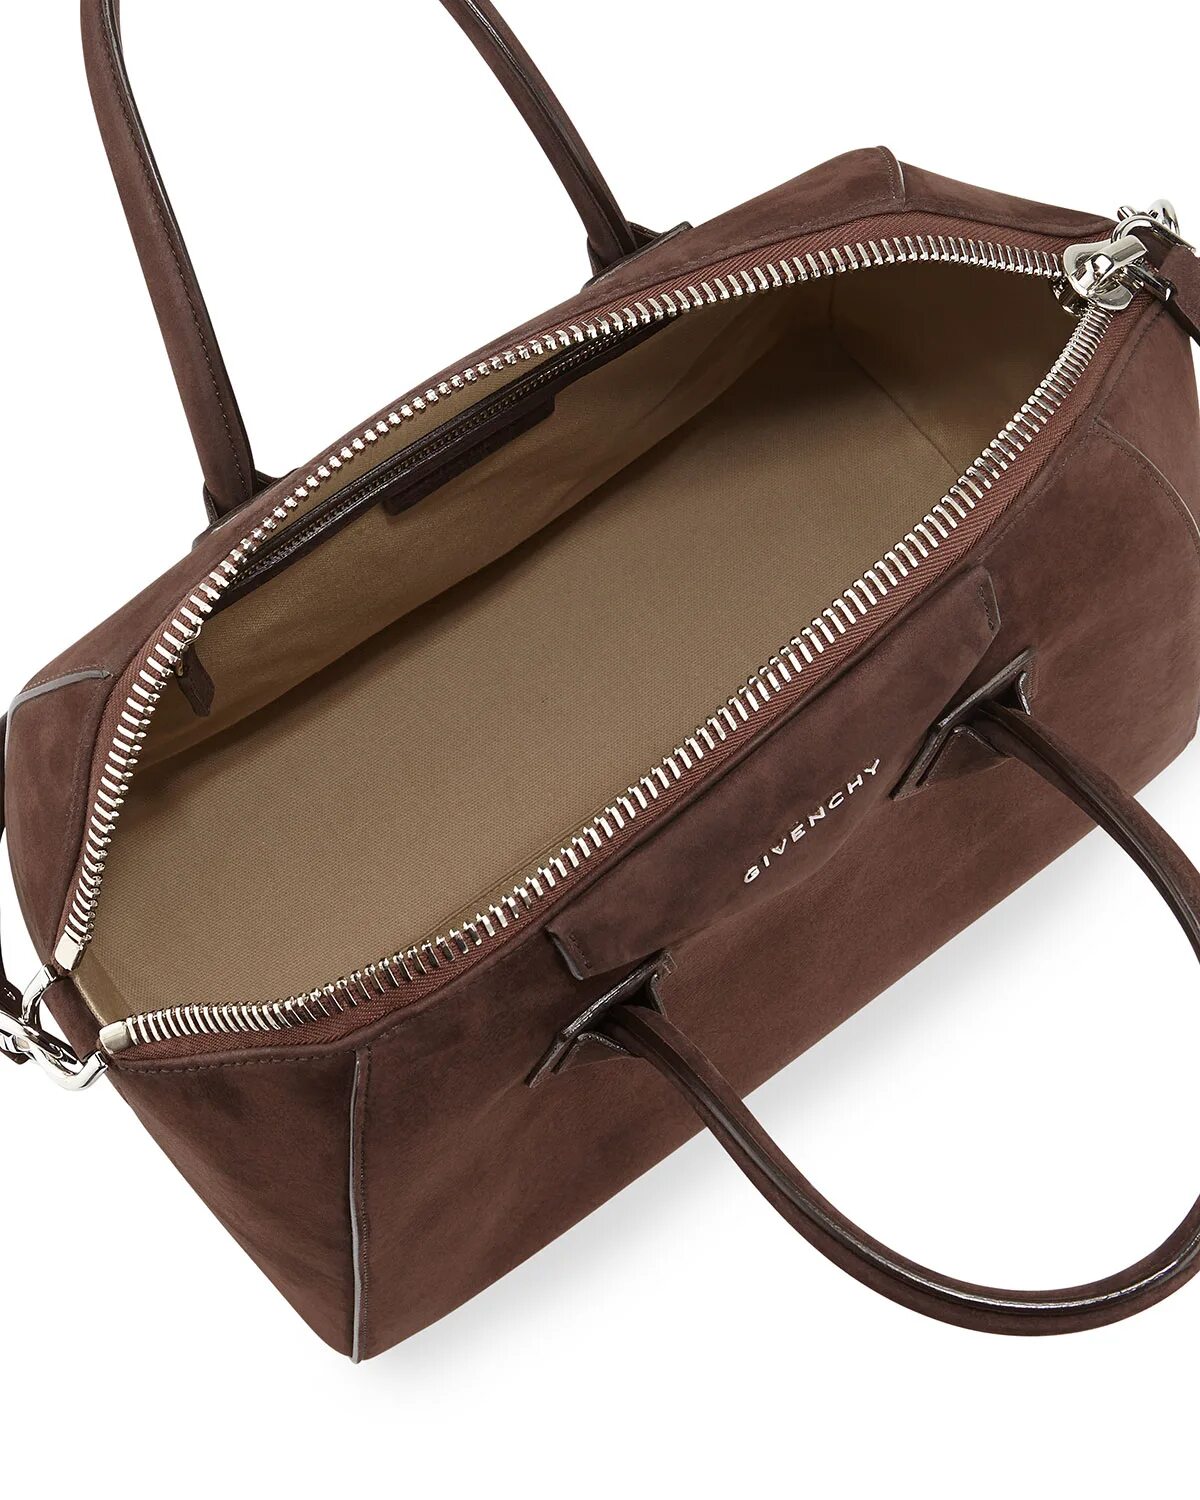 Brown bag. 2135 Brown сумка. Сумка Givenchy коричневая. Сумка живанши коричневая. Givenchy сумка женская коричневая.